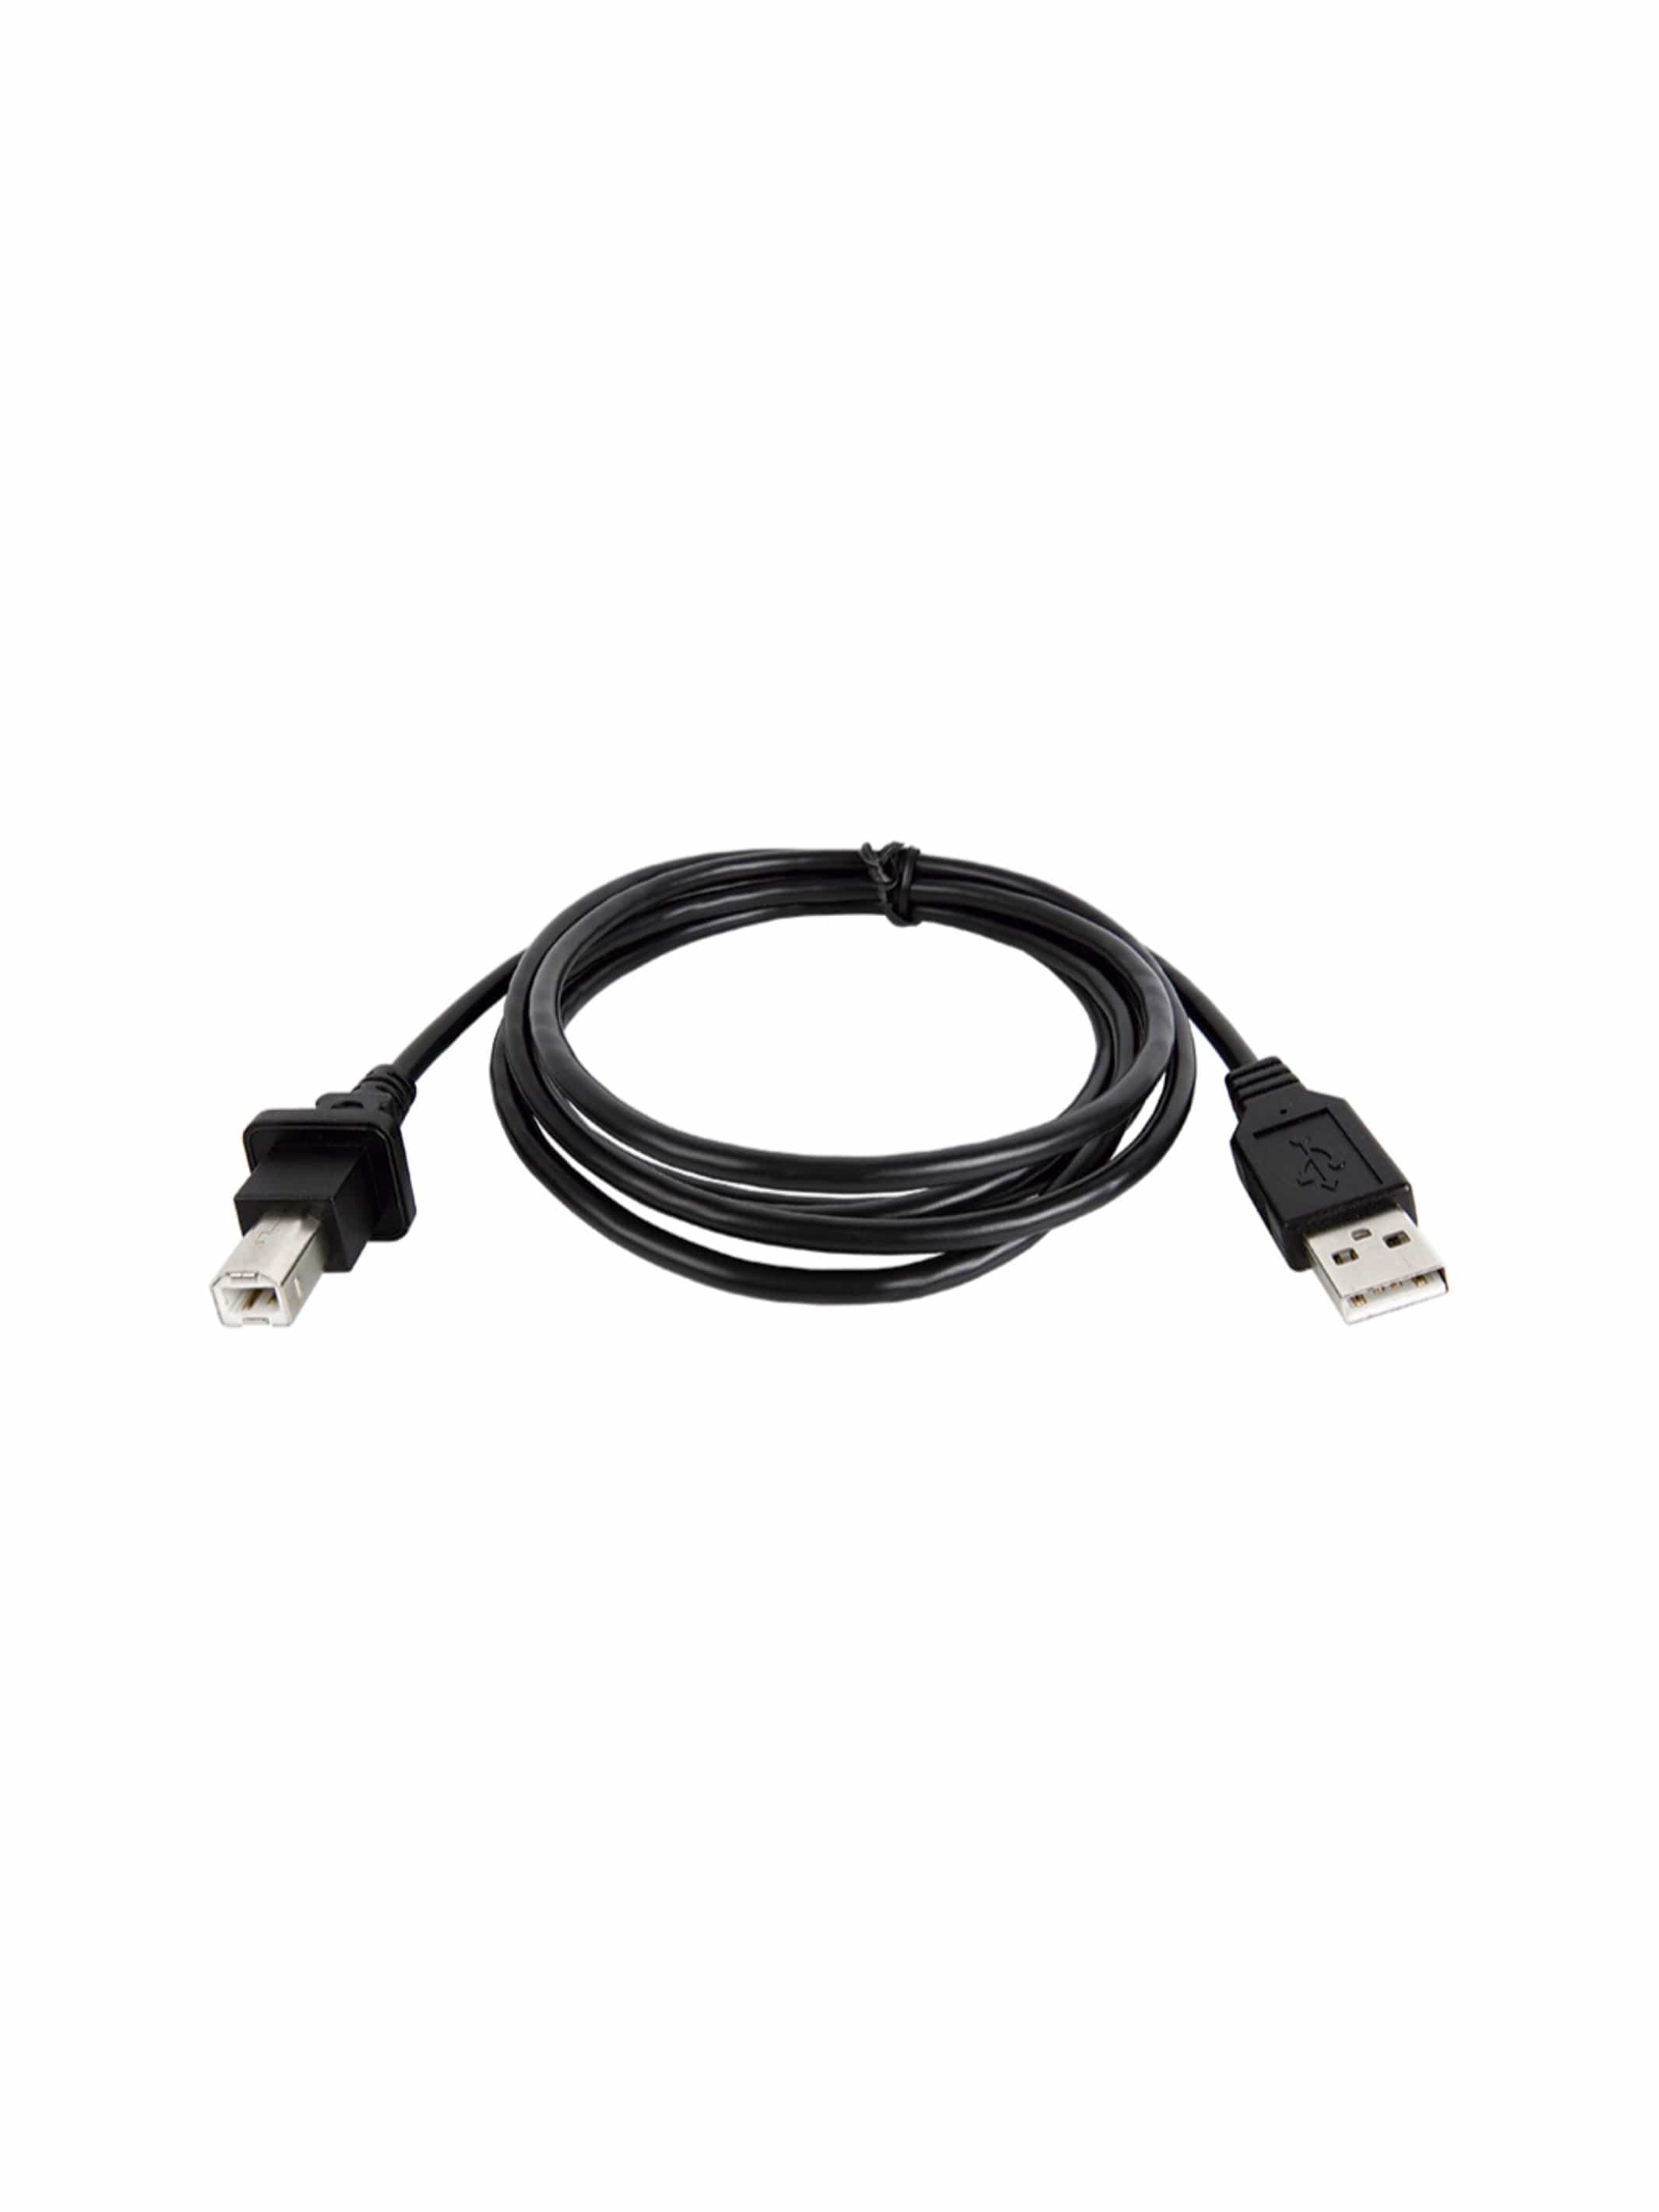 JDC107.9 Cojali Jaltest USB Cable - Bundle - Jaltest Commercial Vehicle, On Highway & Construction, MH, Power Systems Diagnostic Kit